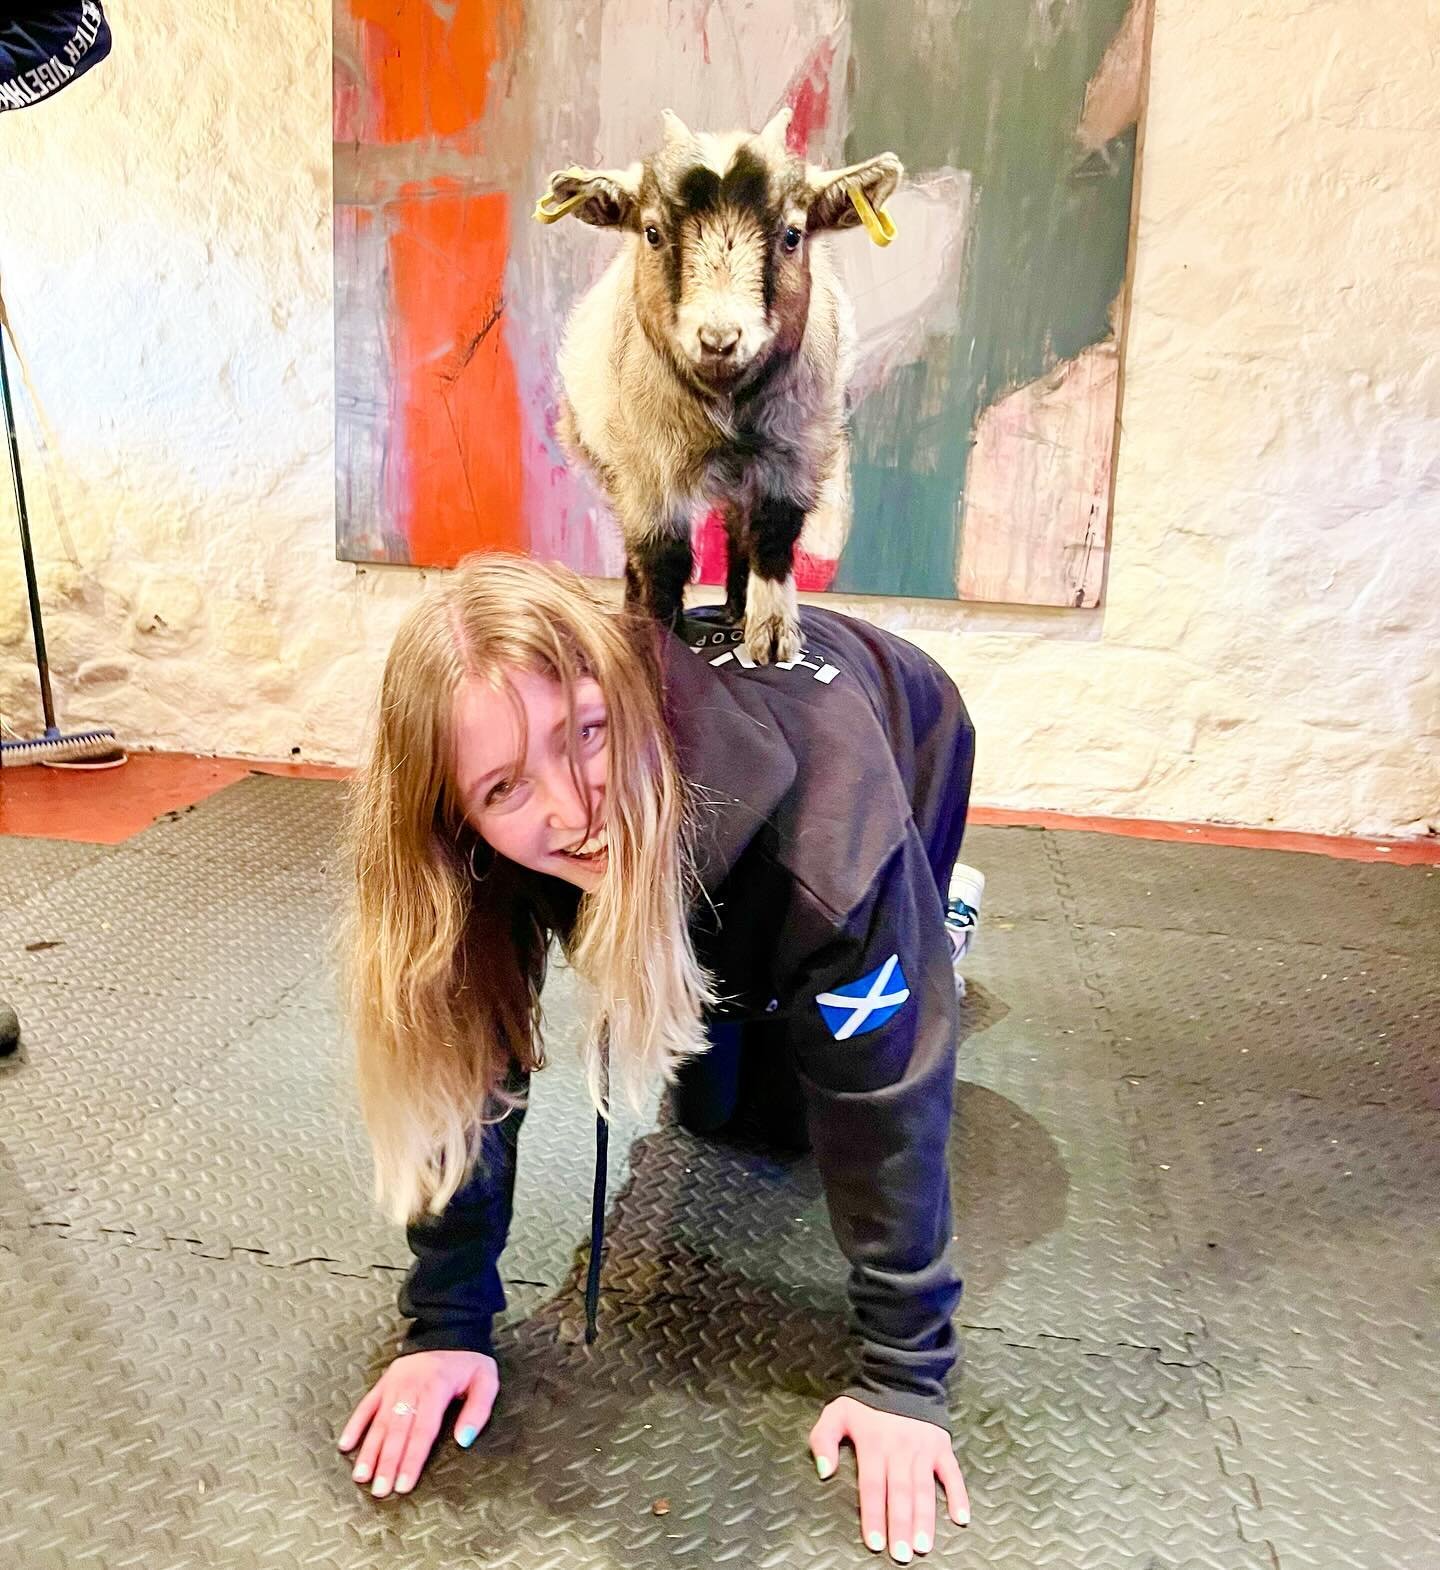 Baby Diego seems to be a poser @thepilatesattic 

#goats #pygmygoats #goatpilates #babygoat #edinburgh #fife #scotland #pilates